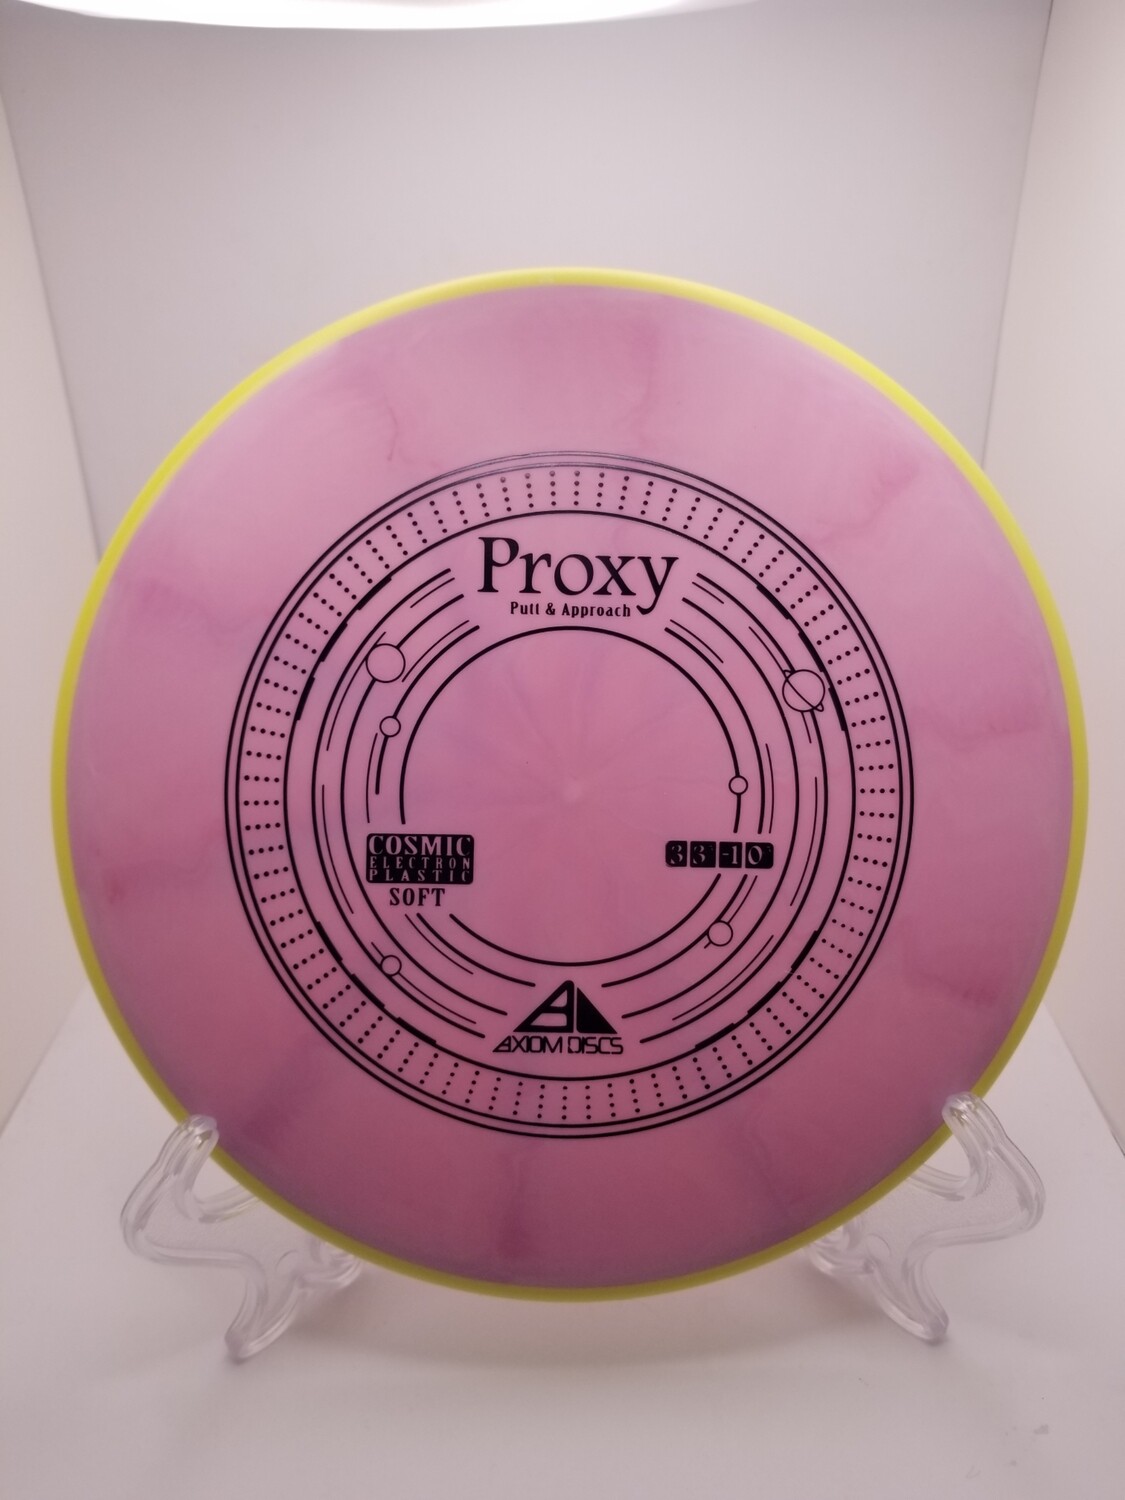 Axiom Discs Proxy Pink Swirl with Yellow Rim Cosmic Electron Plastic Soft 171g